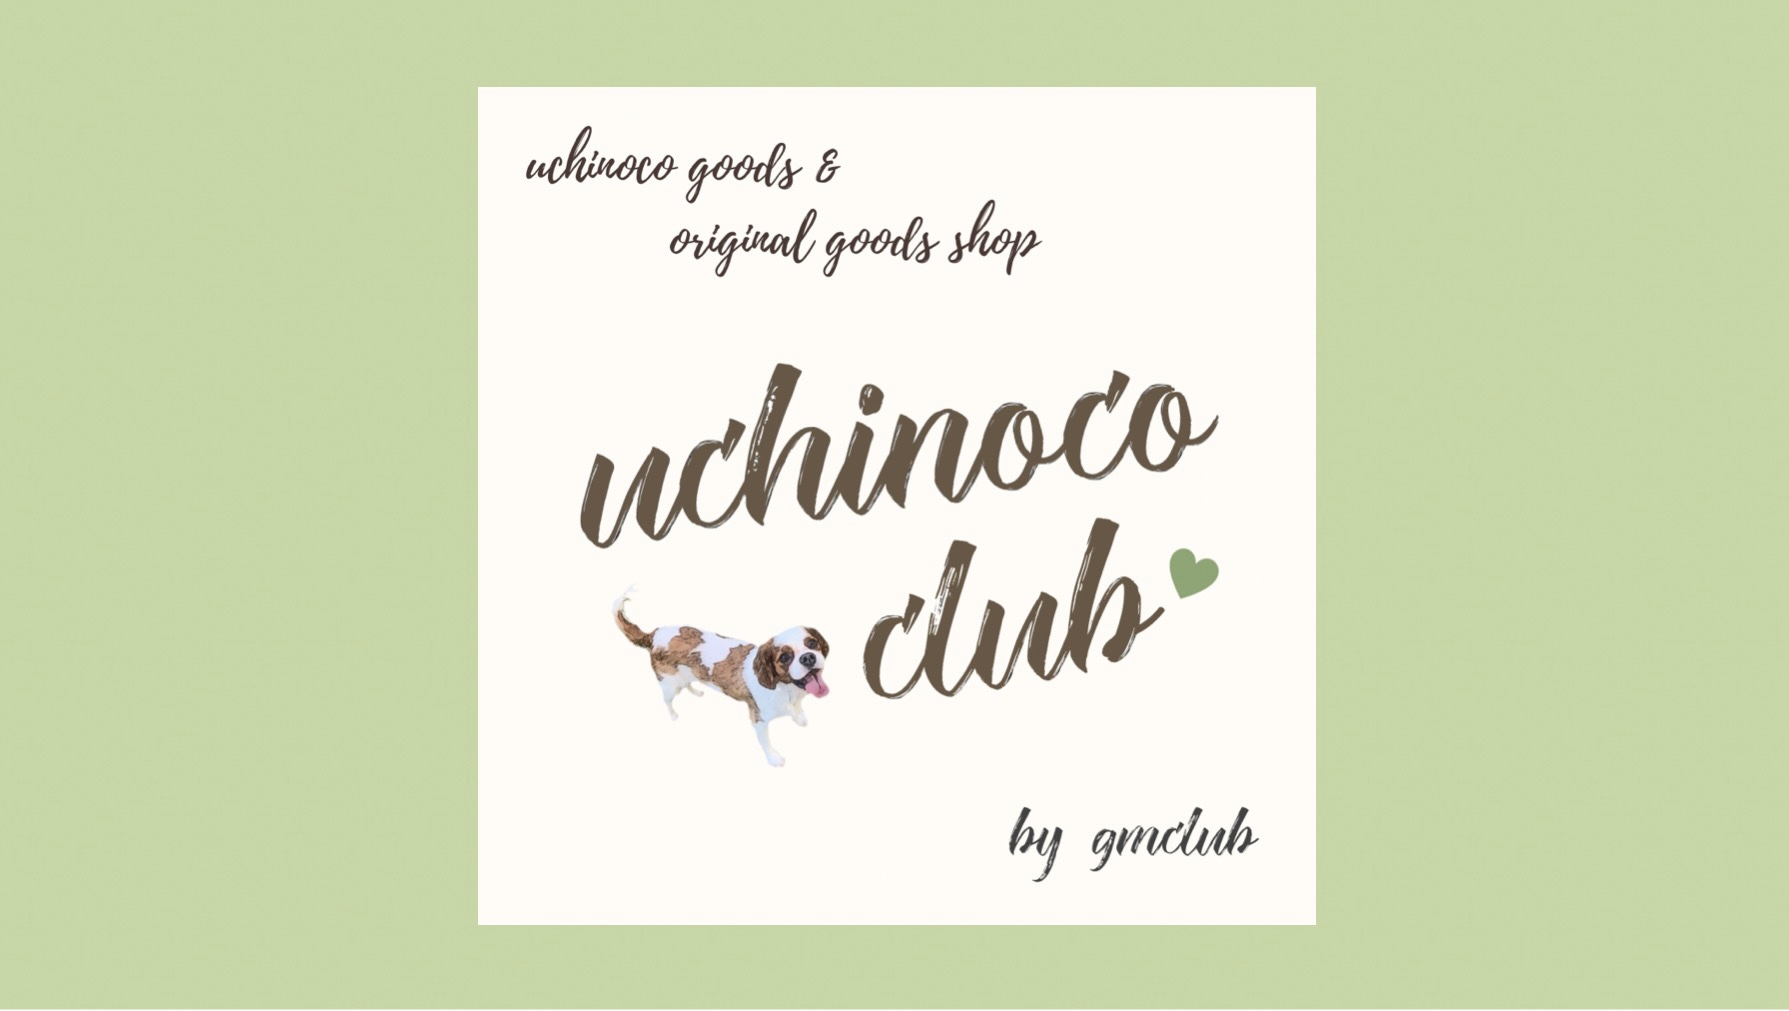 gmclub 姉妹店【 uchinoco club 】début ♛